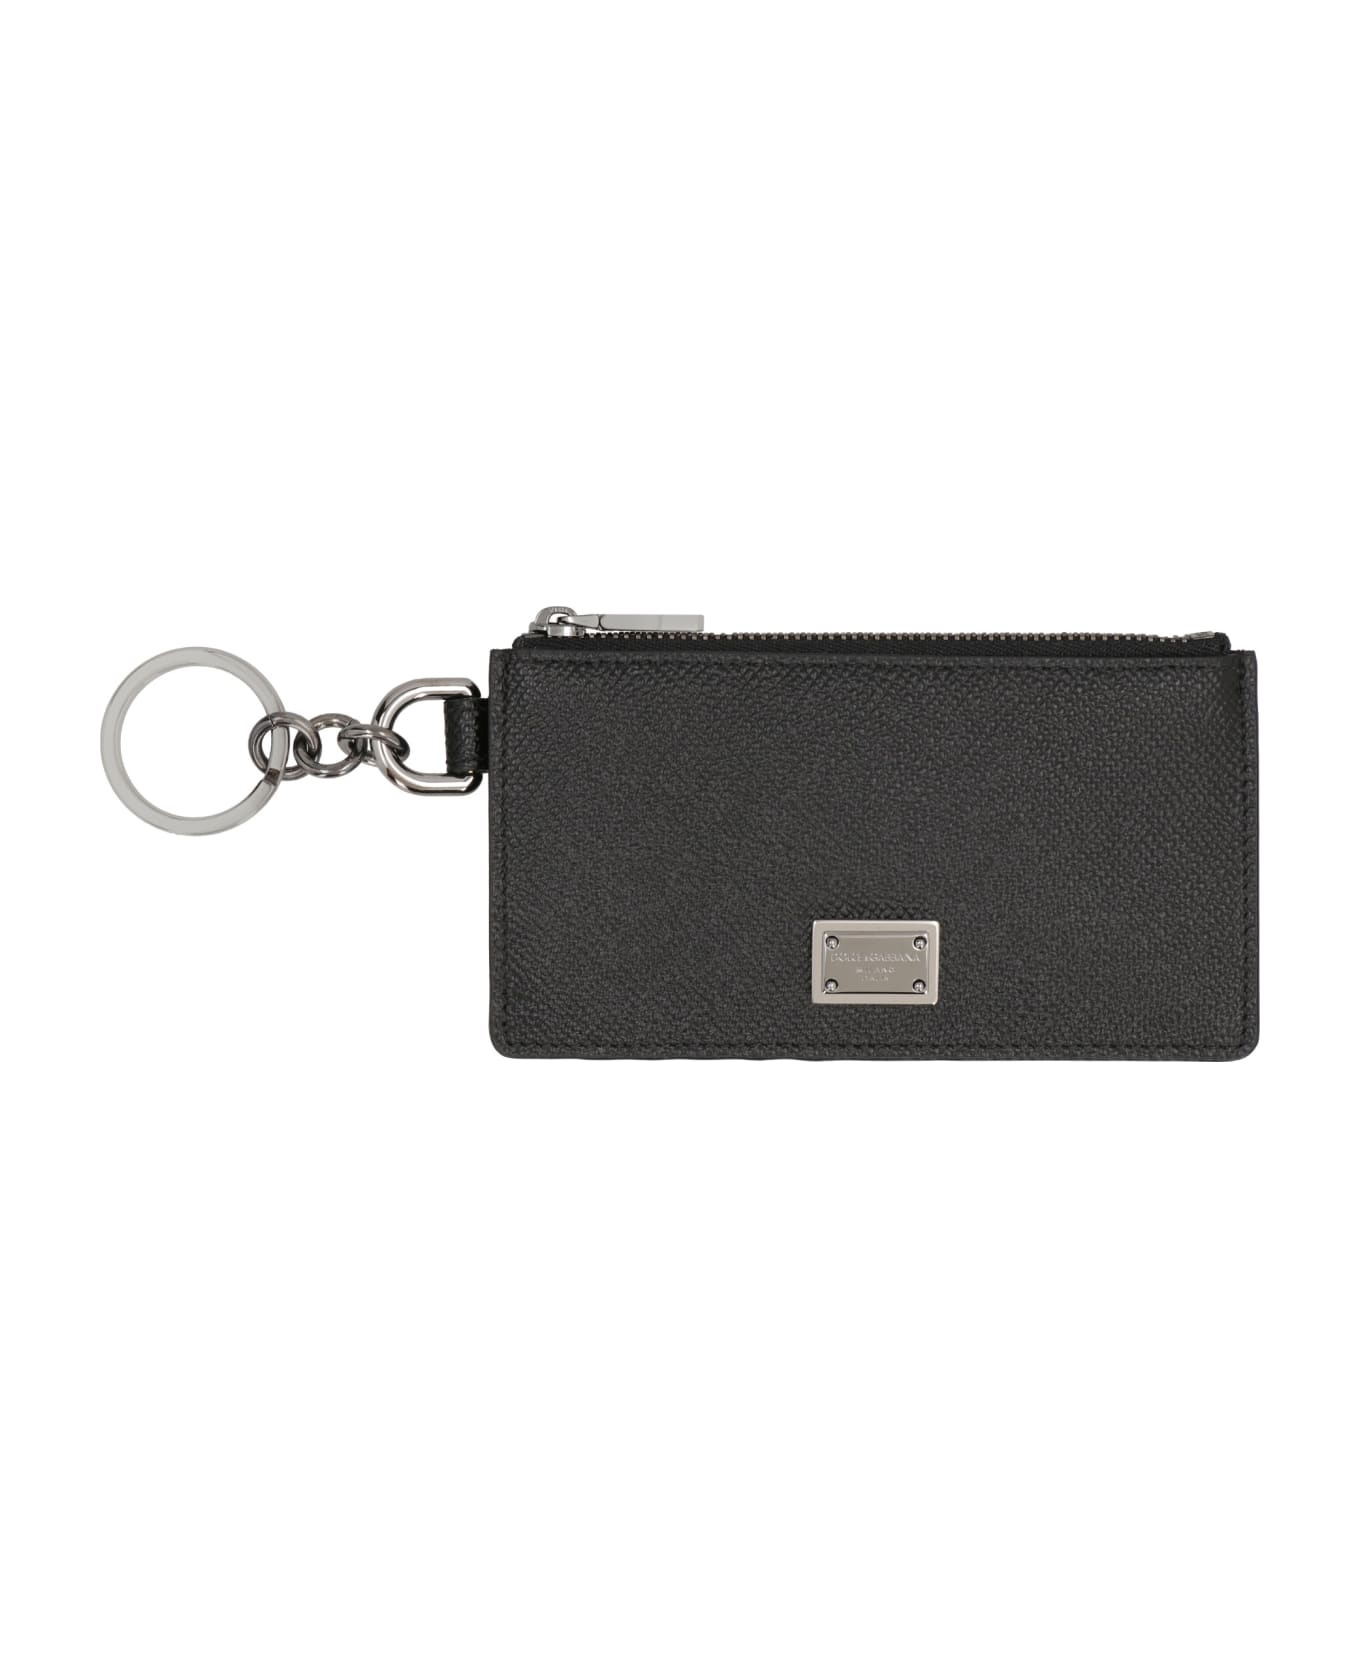 Dolce & Gabbana Leather Card Holder - Nero